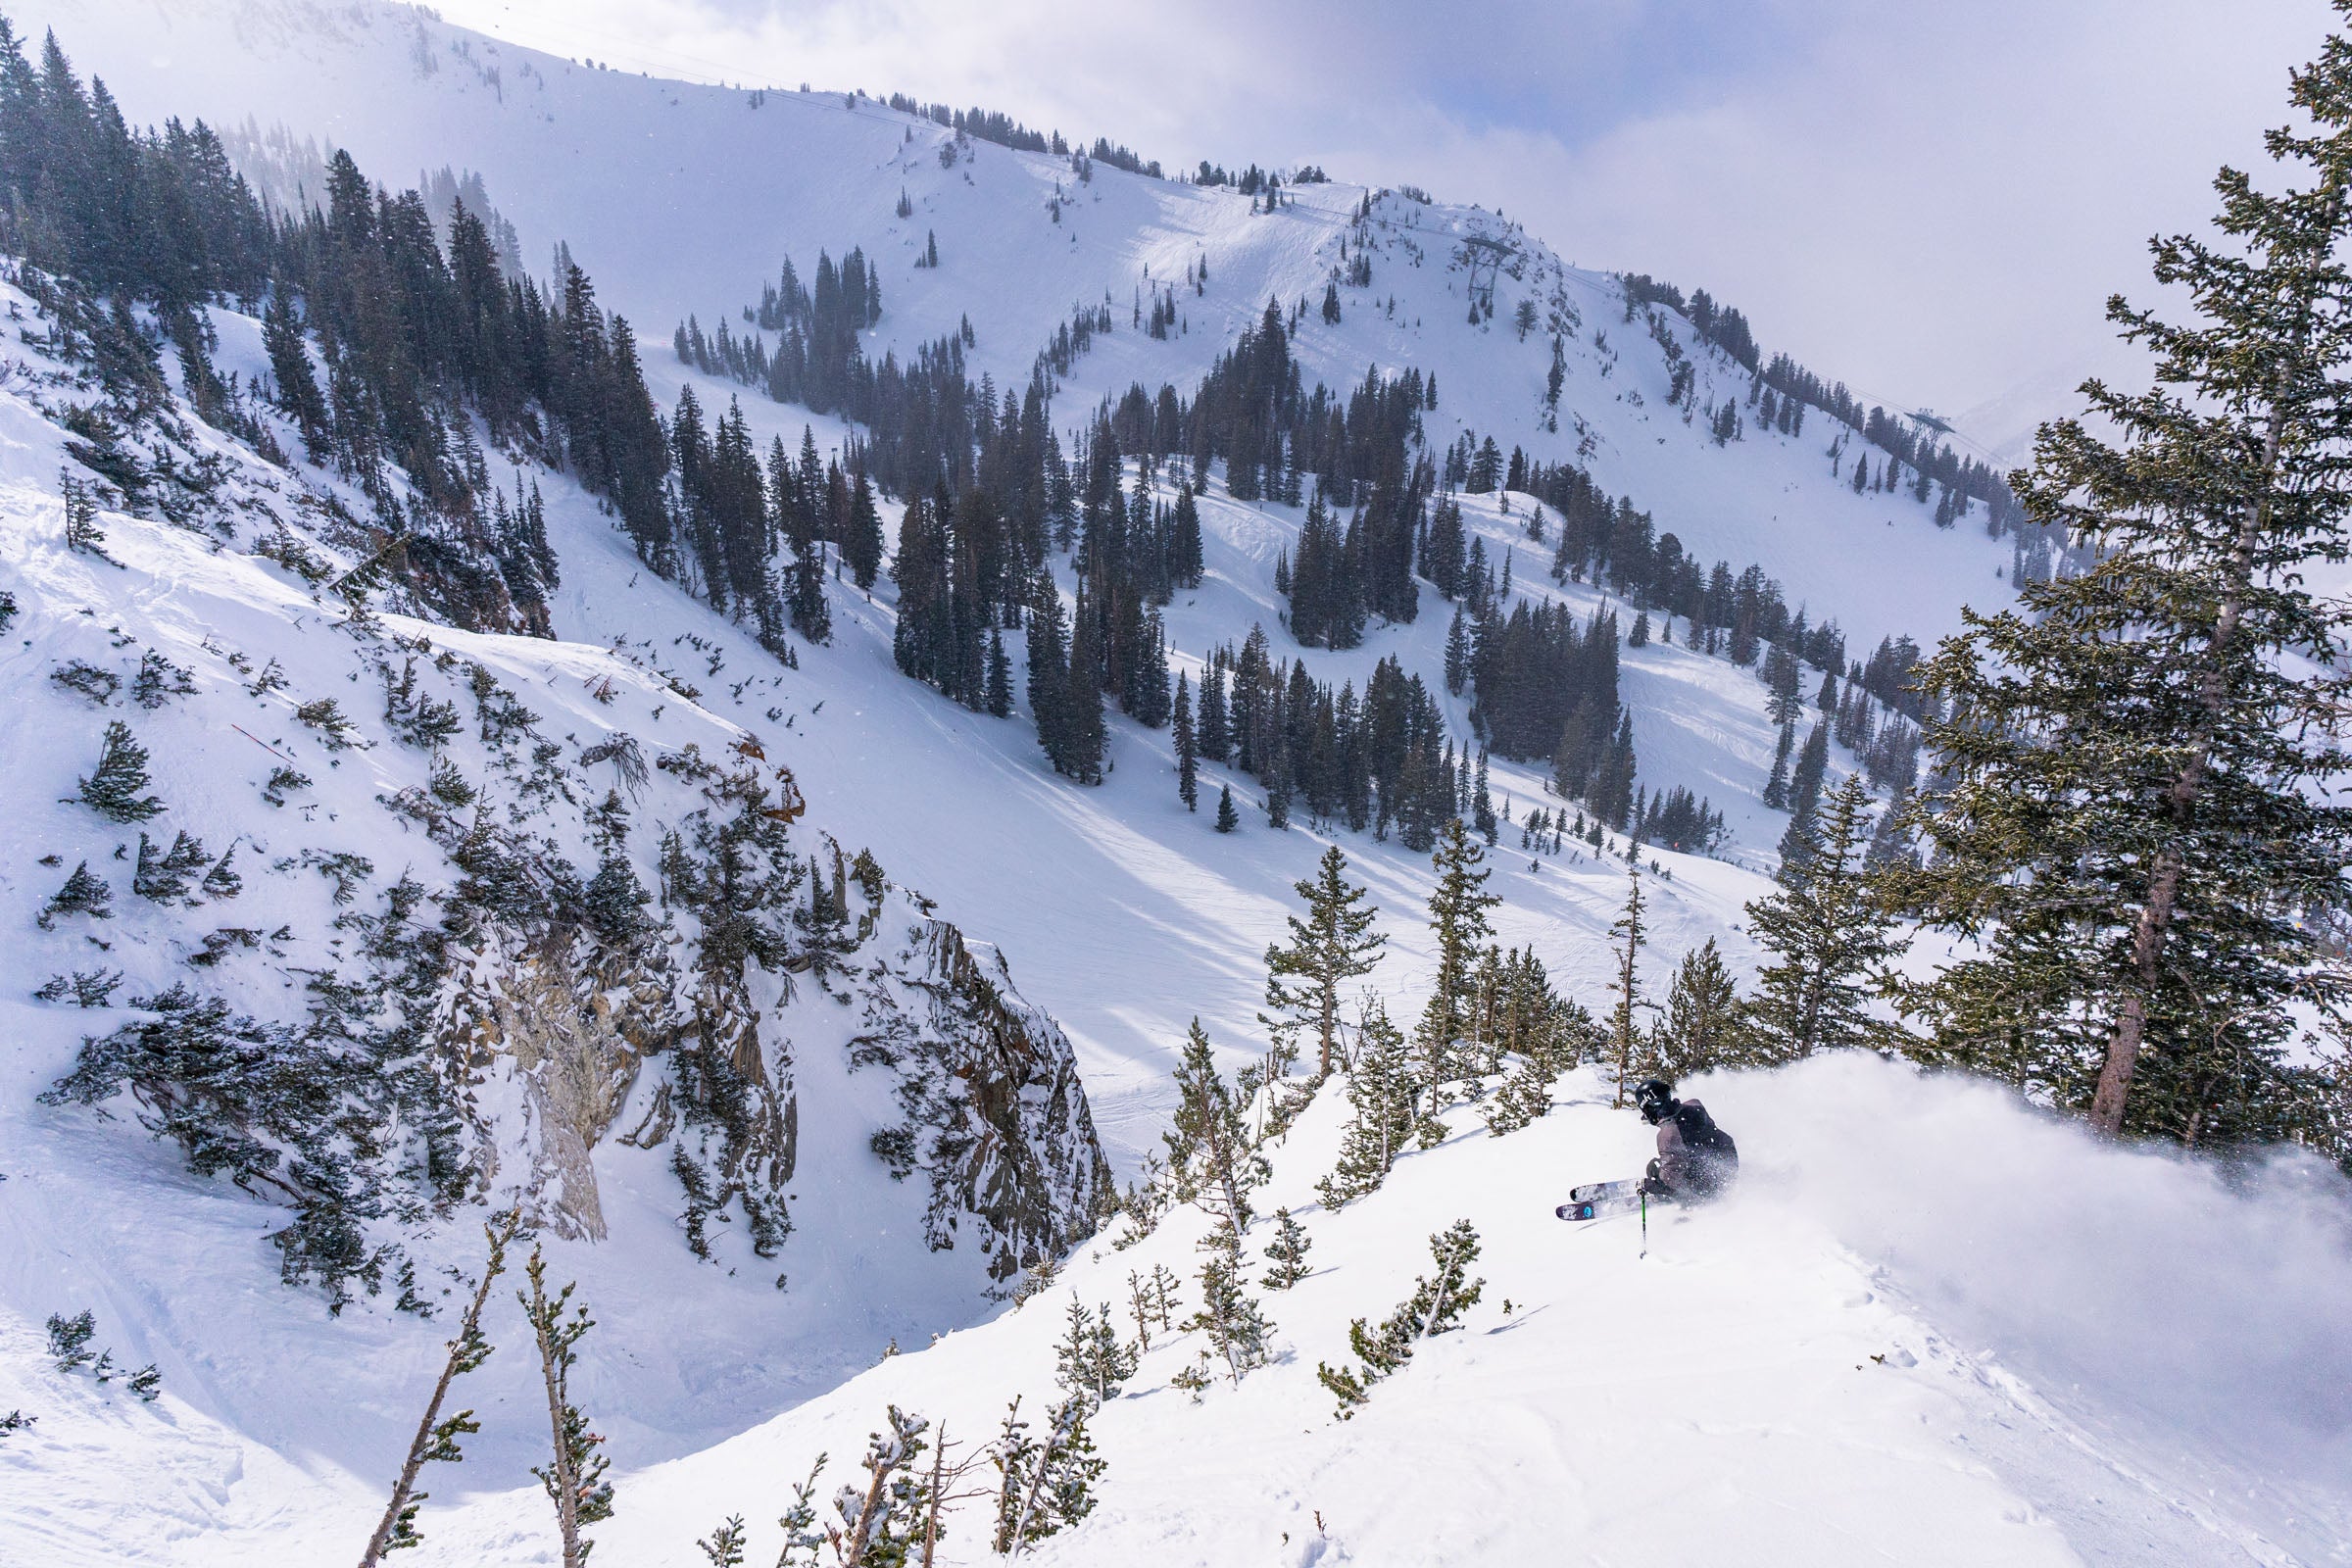 Photos: Capturing the Epic Winter Above Salt Lake City - Powder